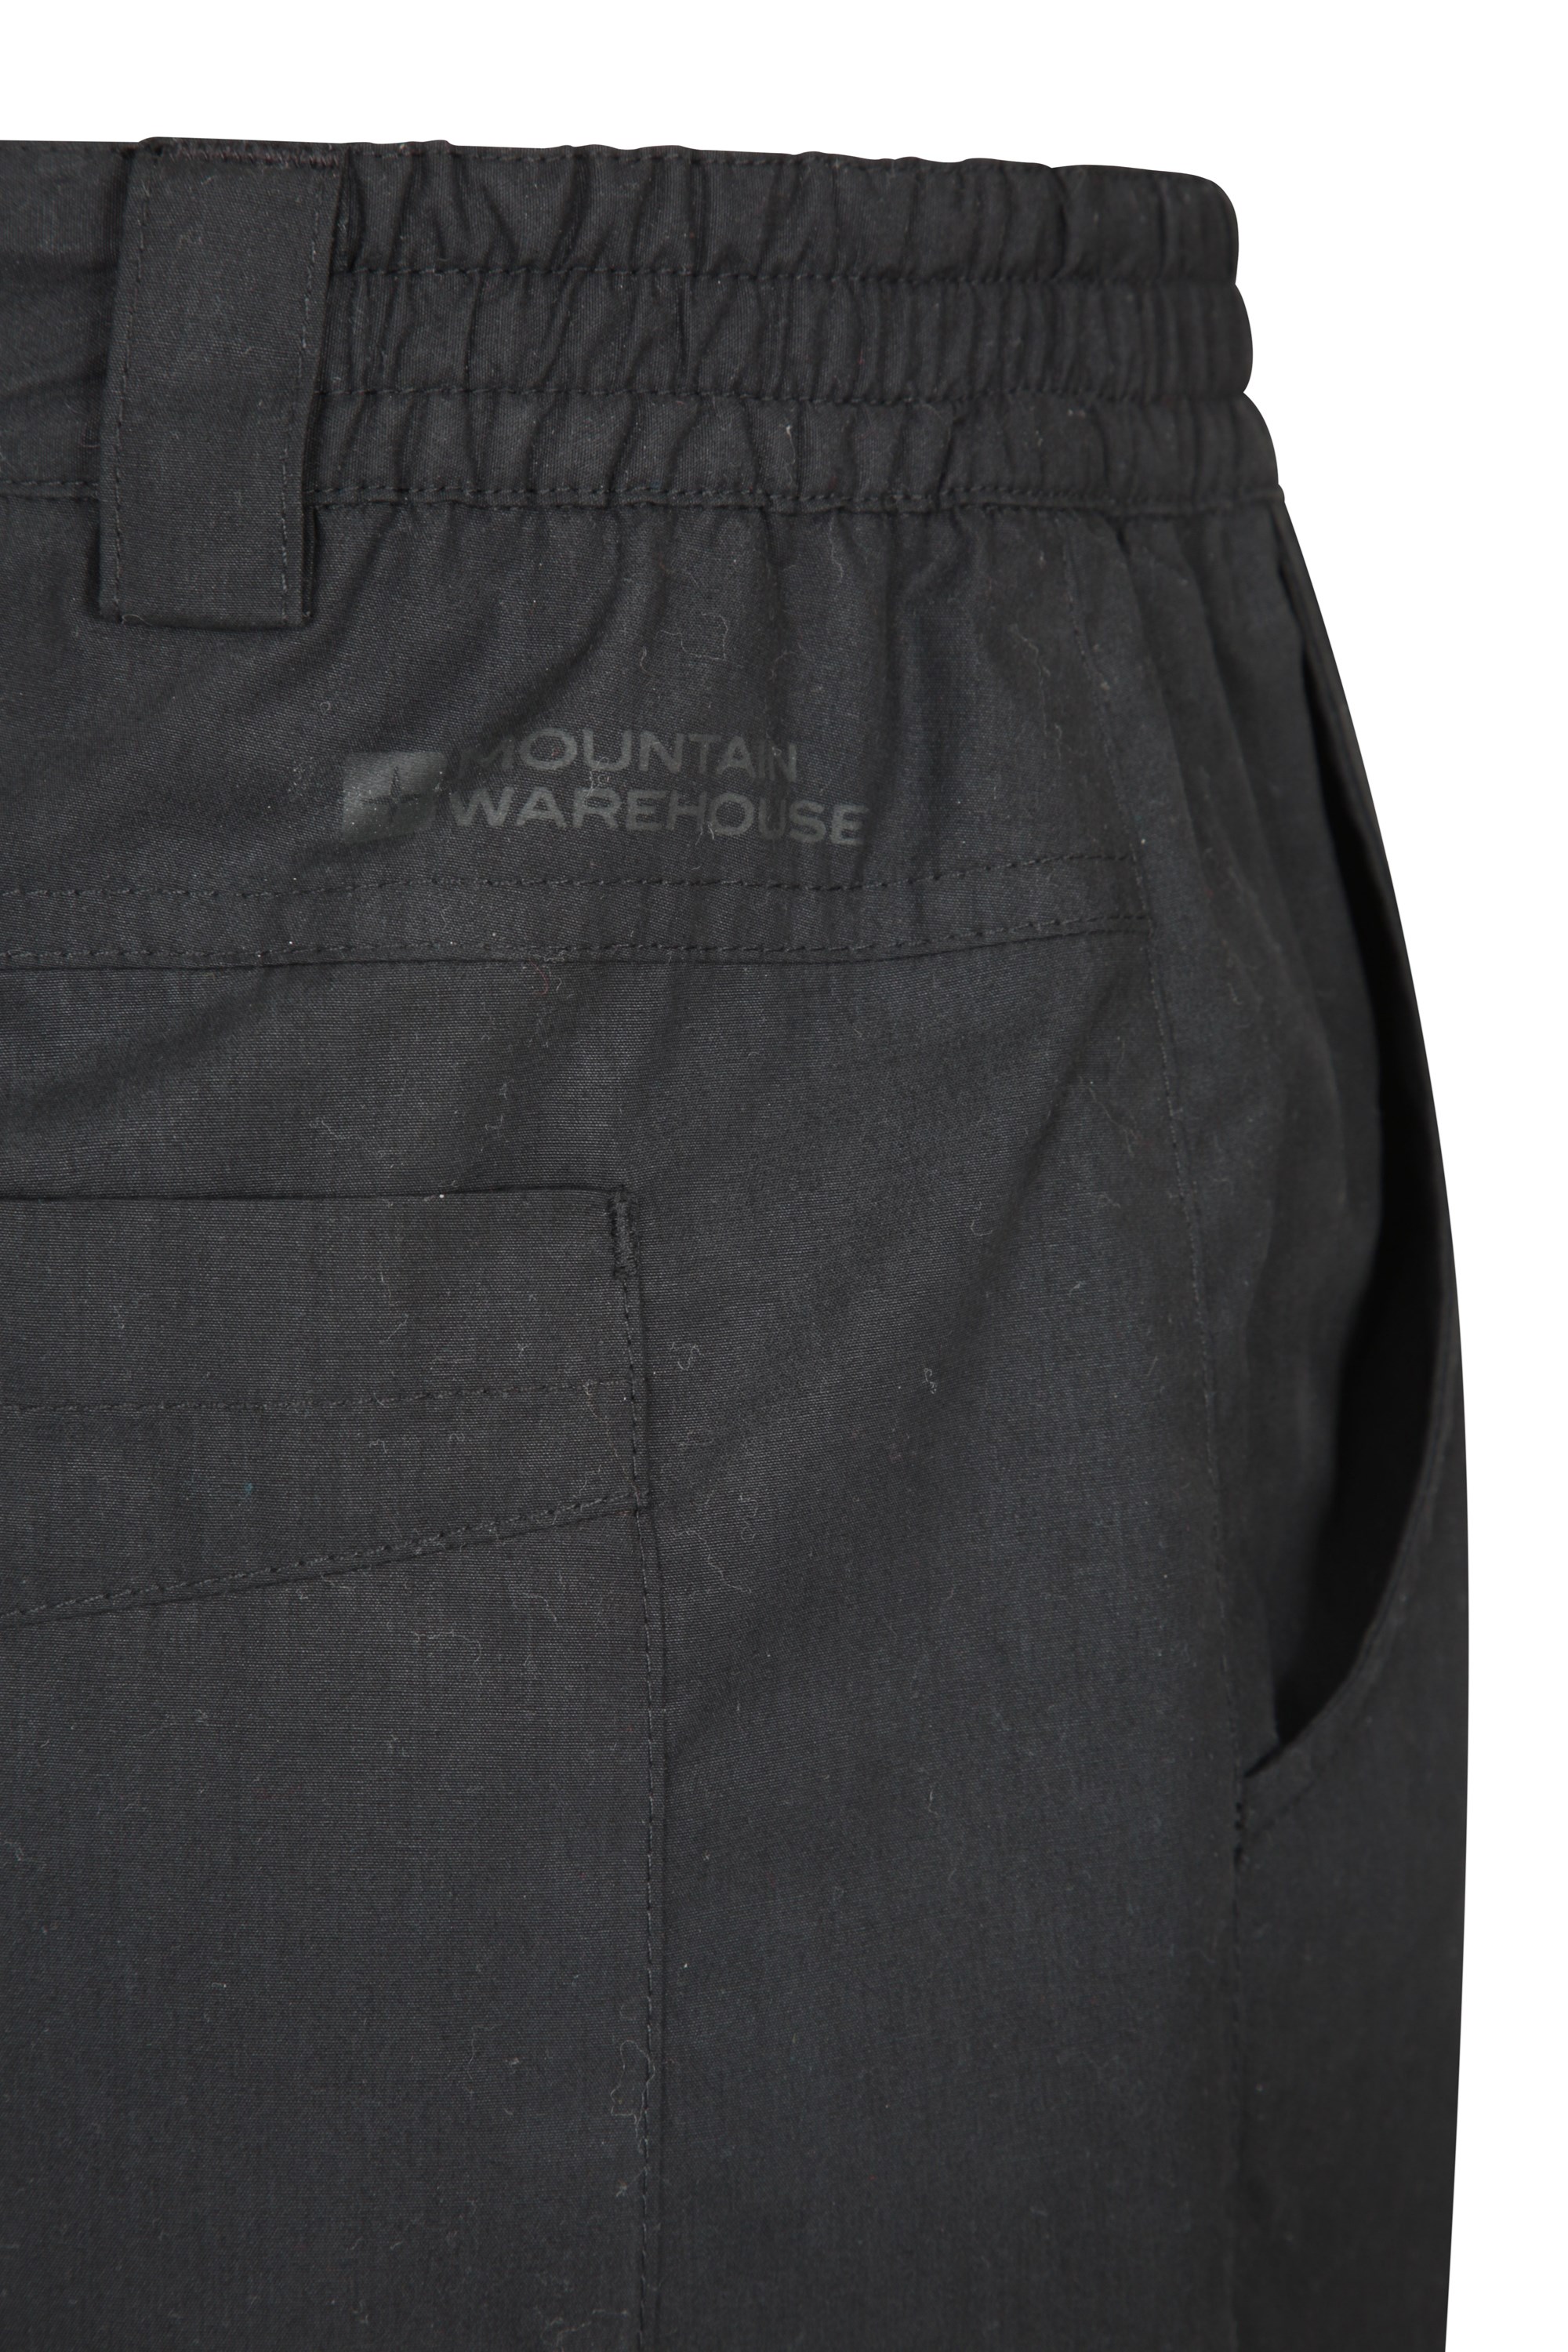 Mountain Warehouse Winter Trek Trouser Lightweight with 2 Zipped Side Pockets 